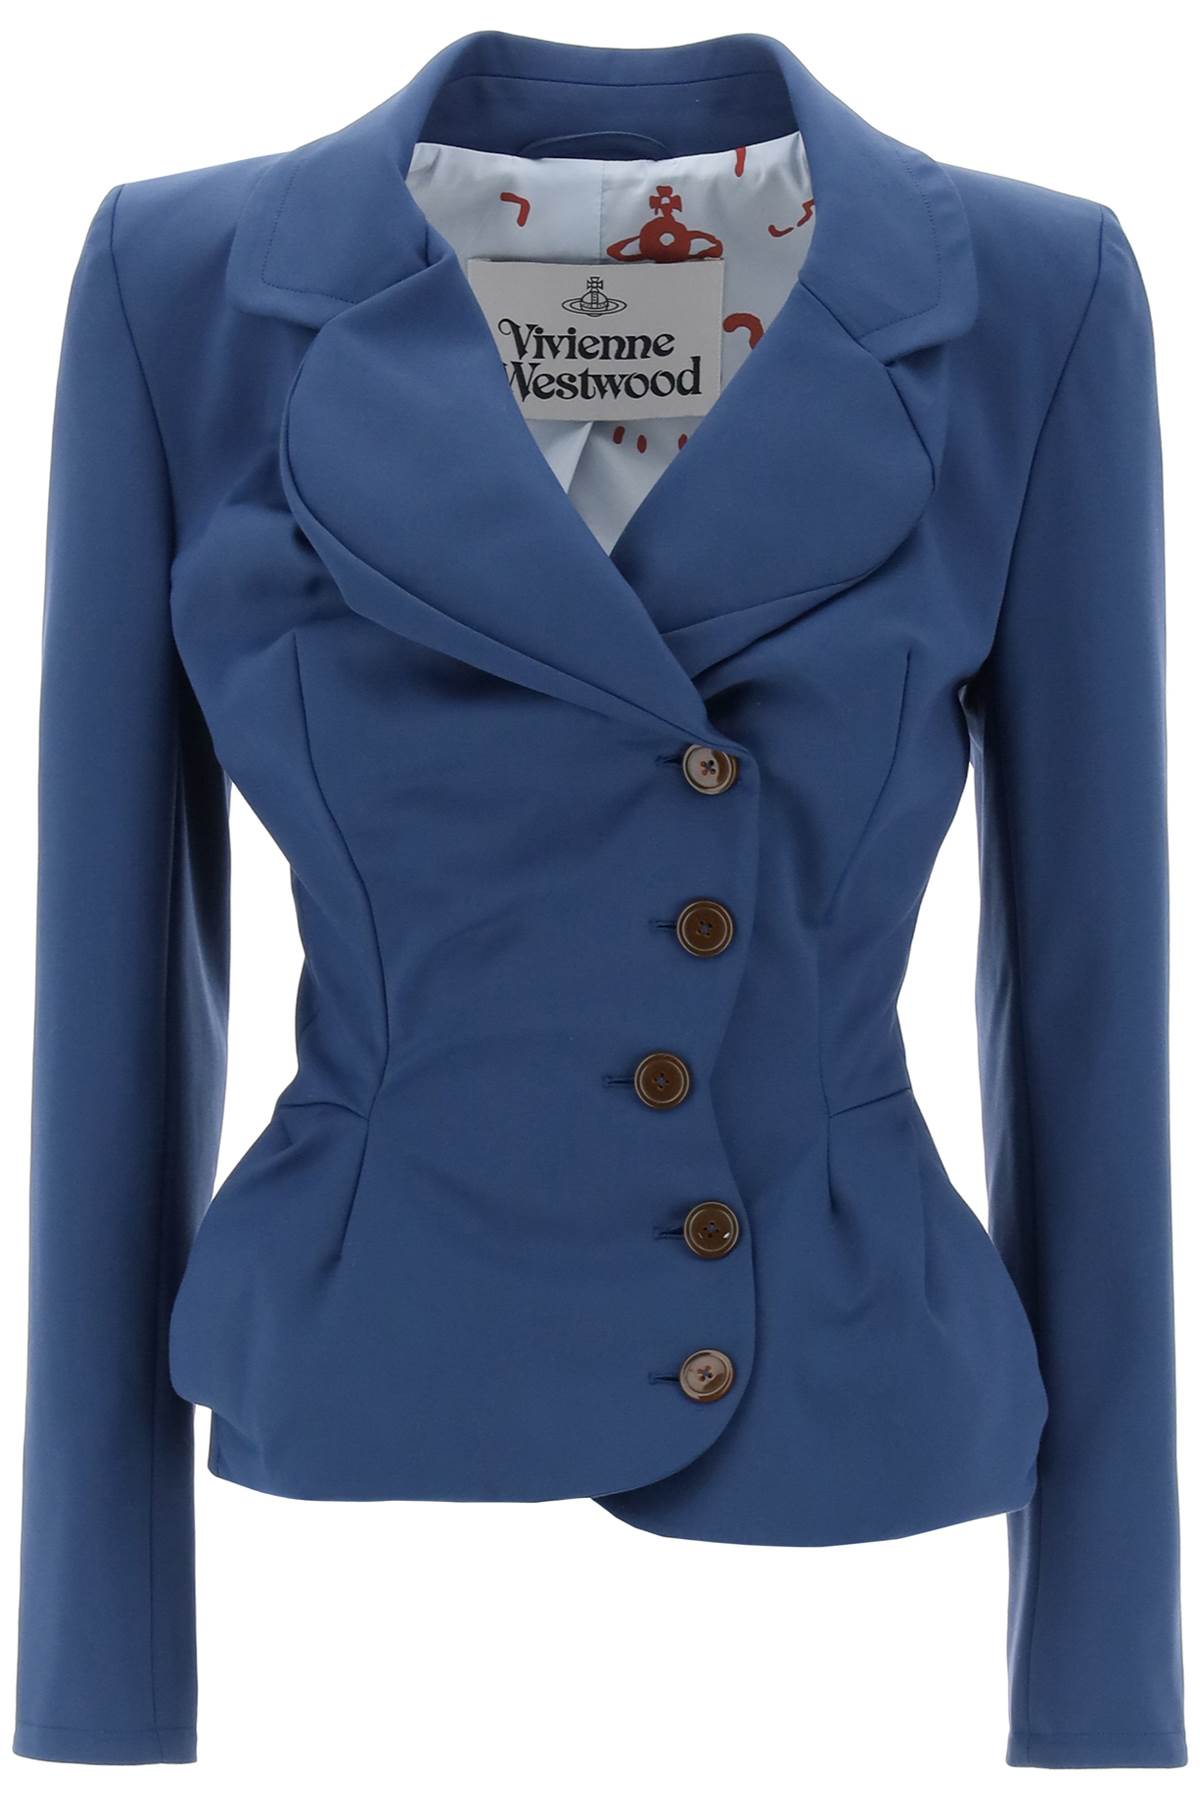 VIVIENNE WESTWOOD Blue Asymmetrical Draped Jacket in Satin-Finish Stretch Cotton Blend